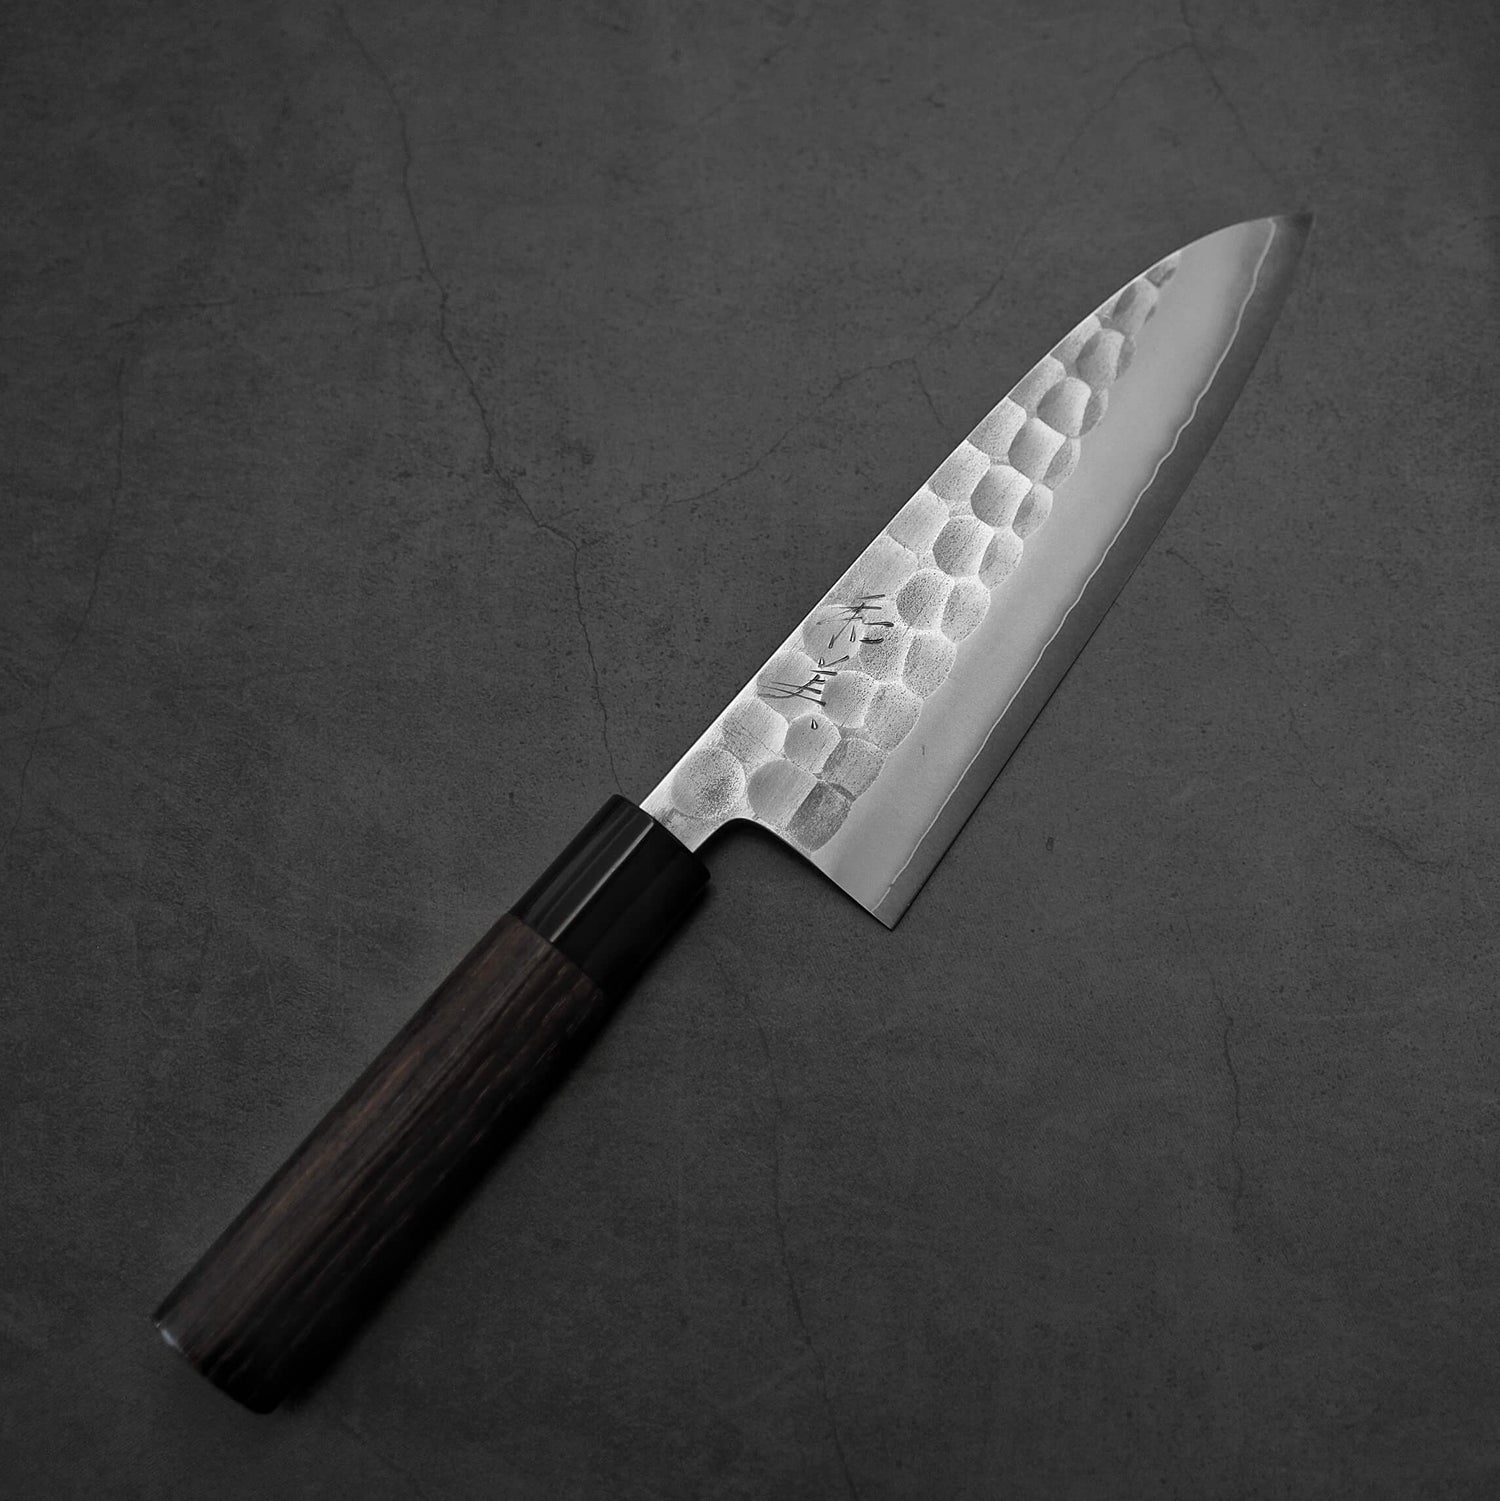 Top down view of a Yoshikane tsuchime SKD santoku knife